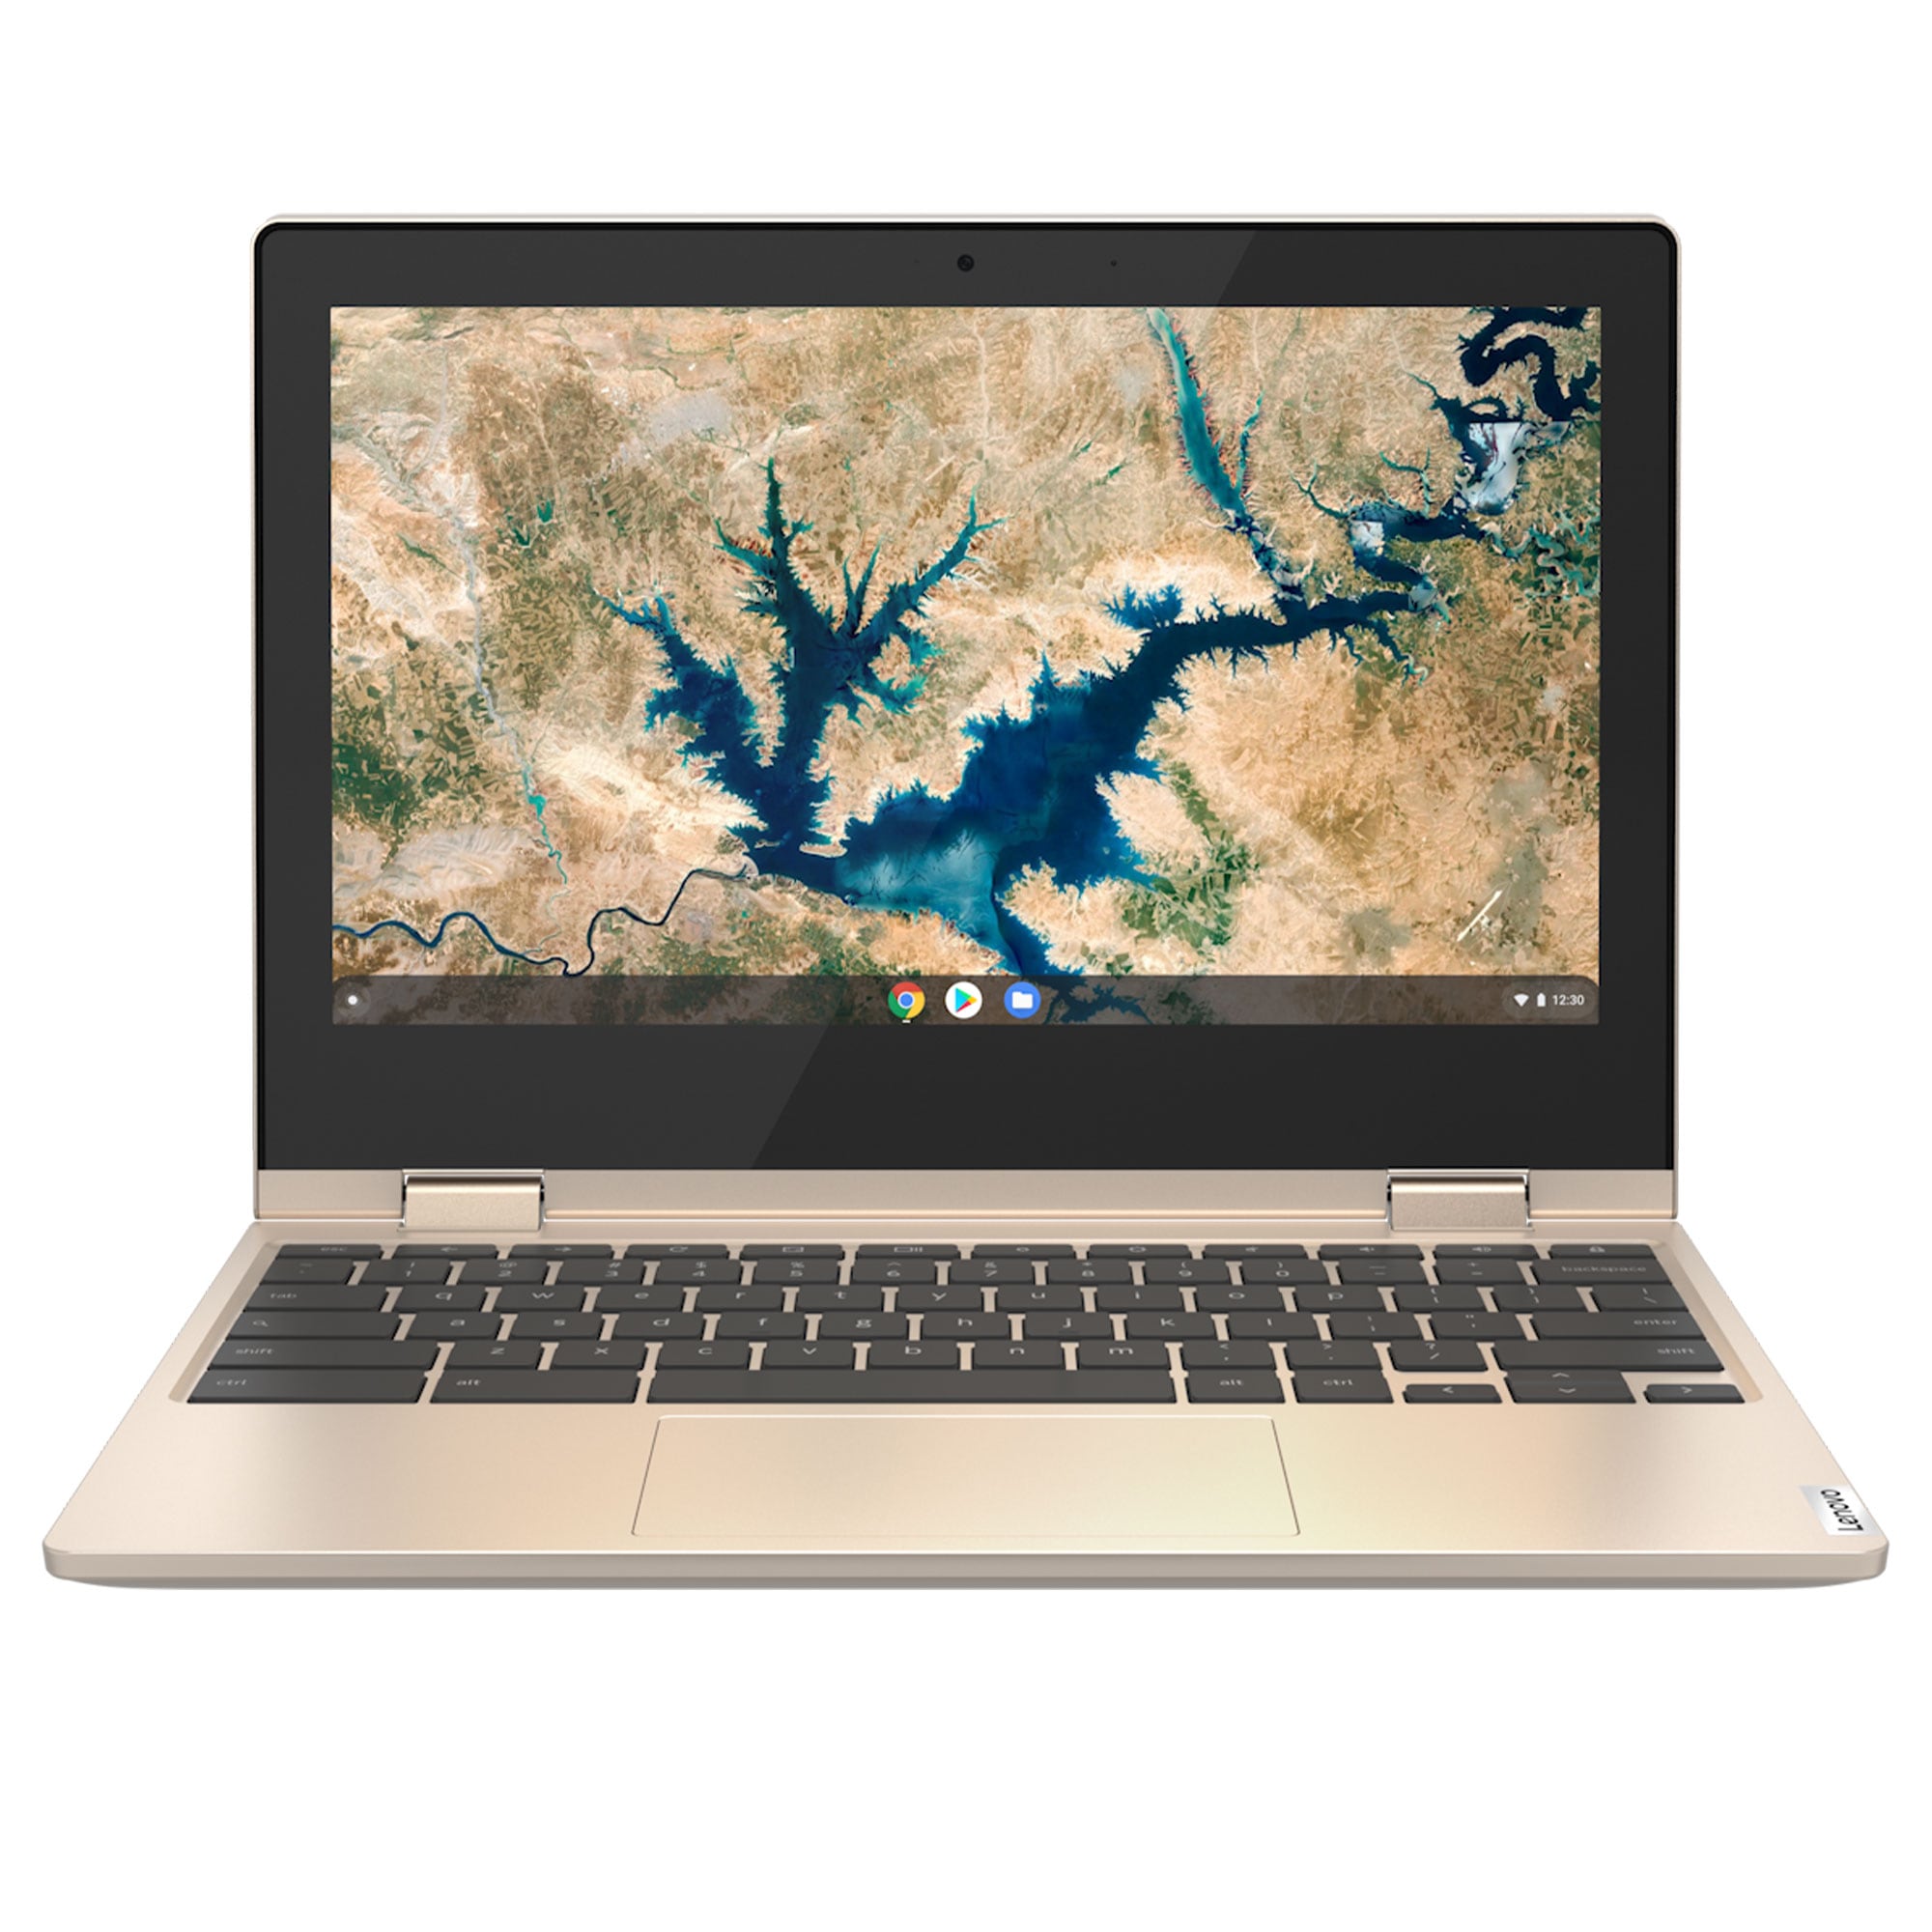 Lenovo Chromebook Flex 3 11.6" Touchscreen 2-in-1 Laptop, Intel Celeron N4020, 4GB RAM, 32GB HD, Chrome OS, Almond, 82BB0007US - image 4 of 7